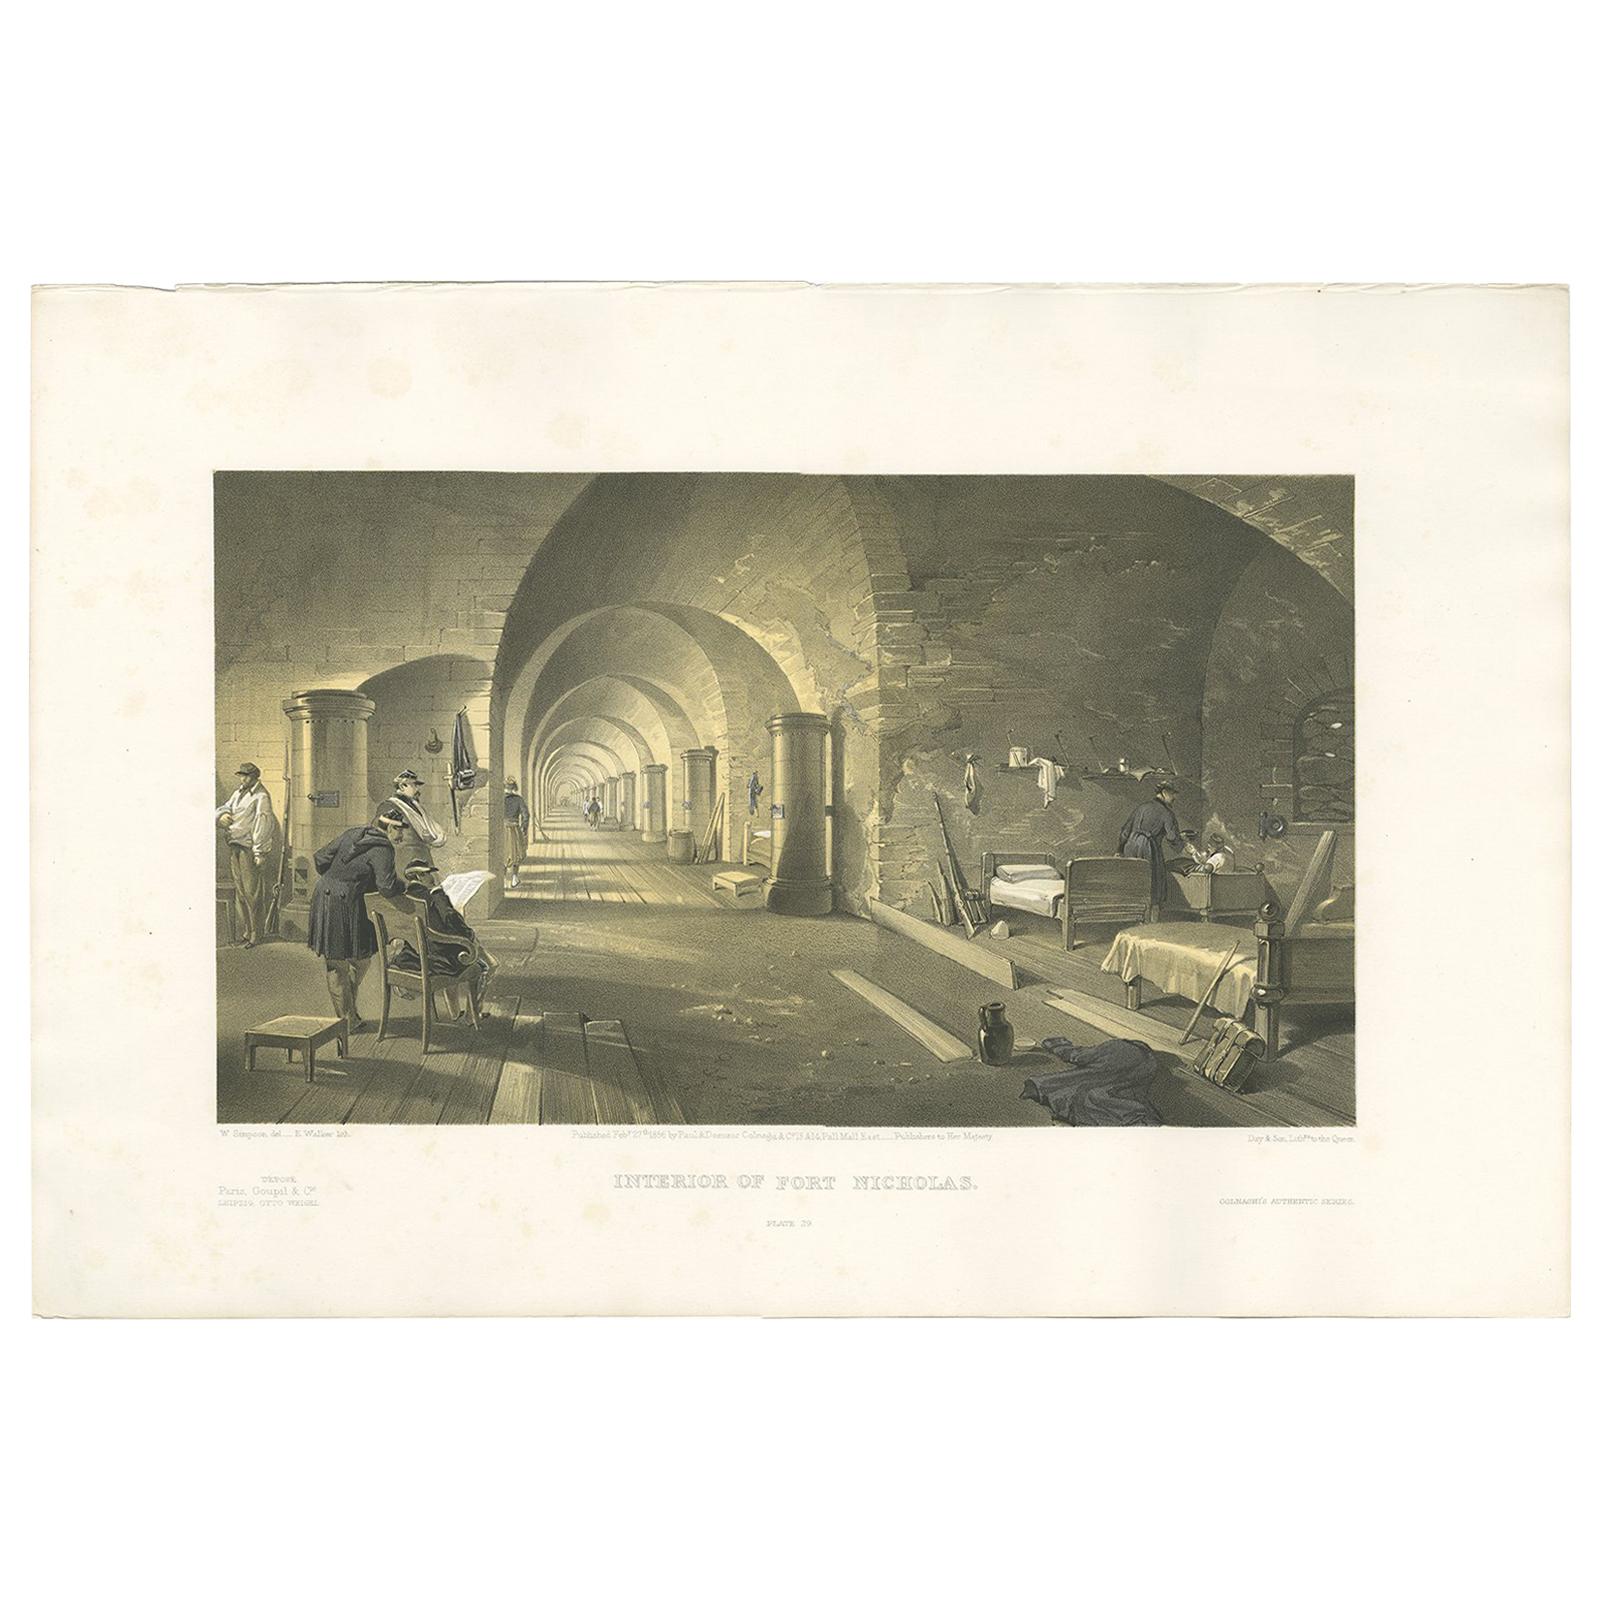 Antique Print of Fort Nicholas 'Crimean War' by W. Simpson, 1855